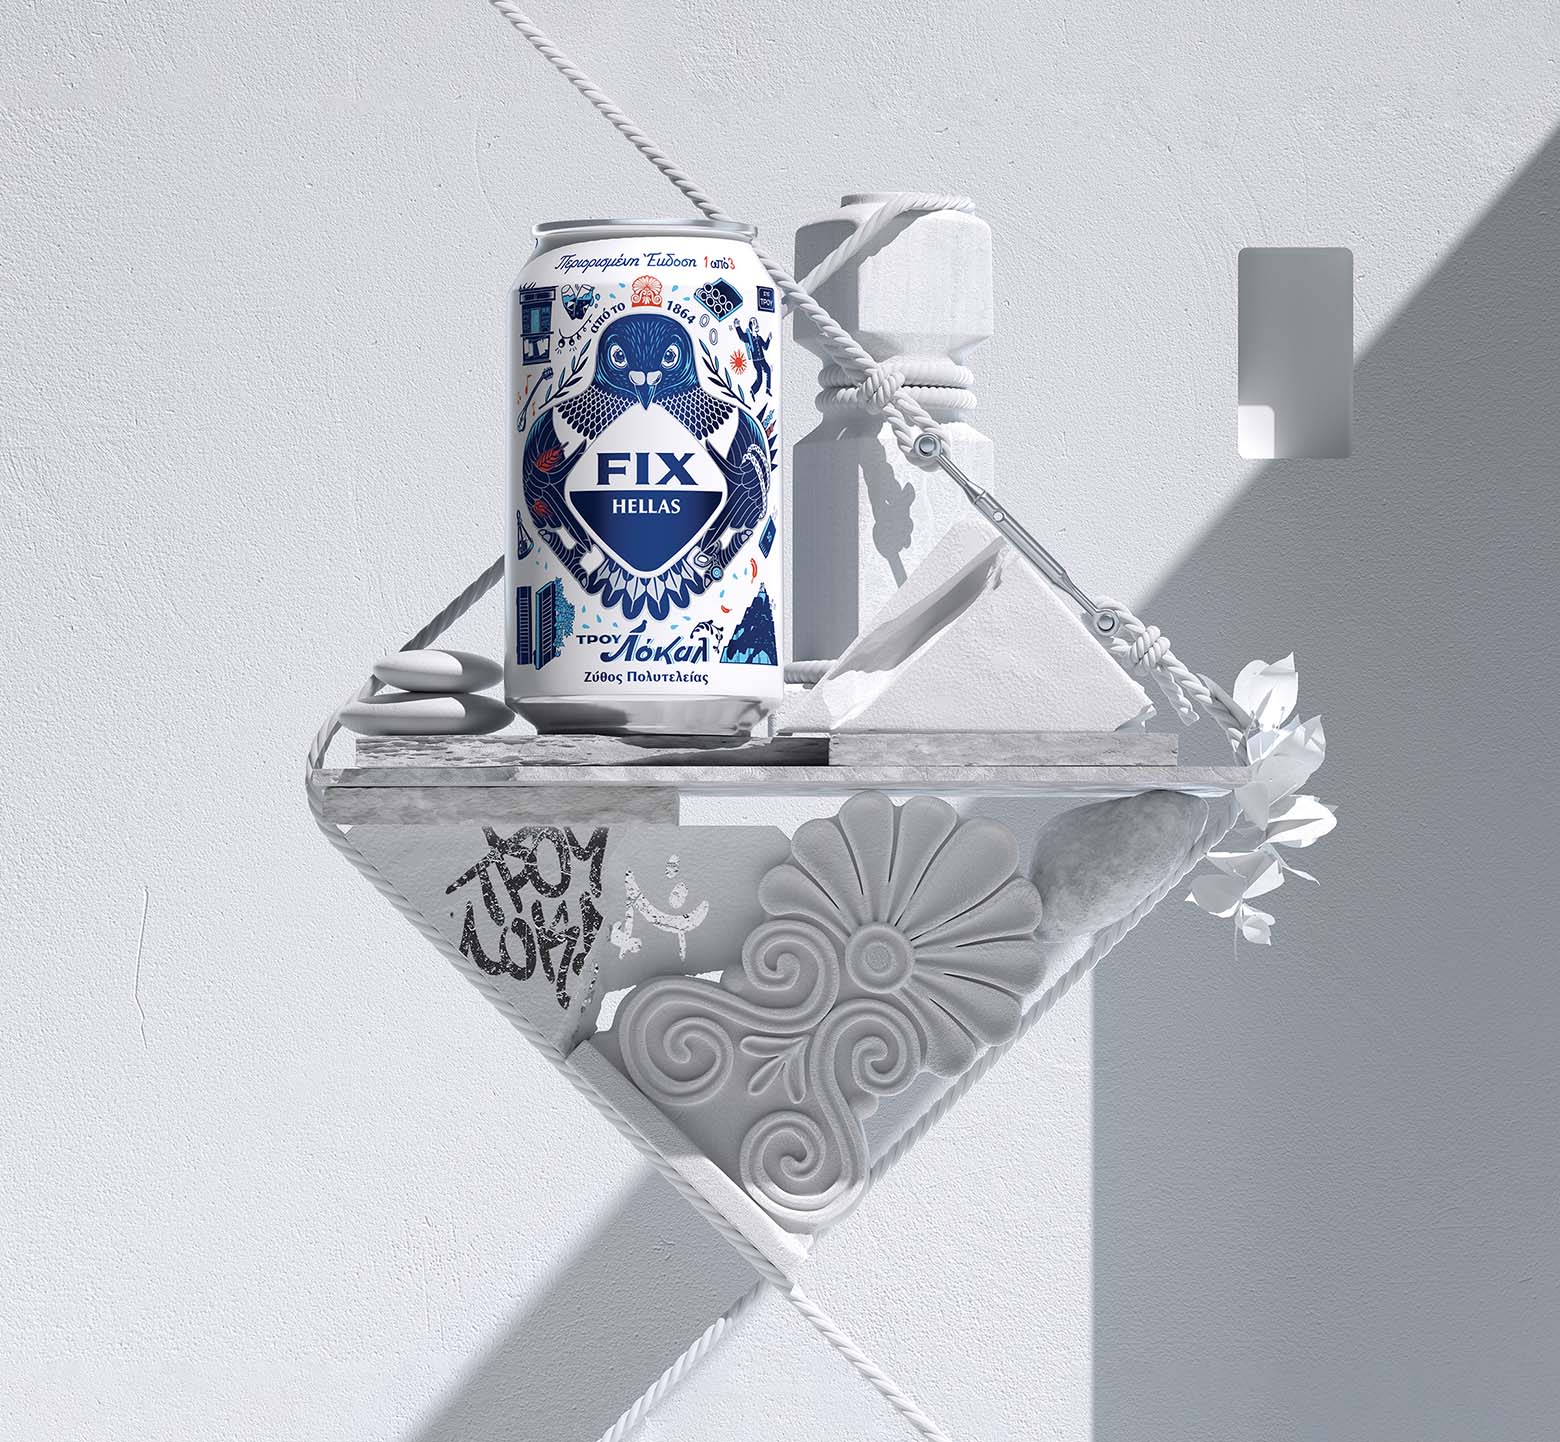 FIX Hellas啤酒包裝設計